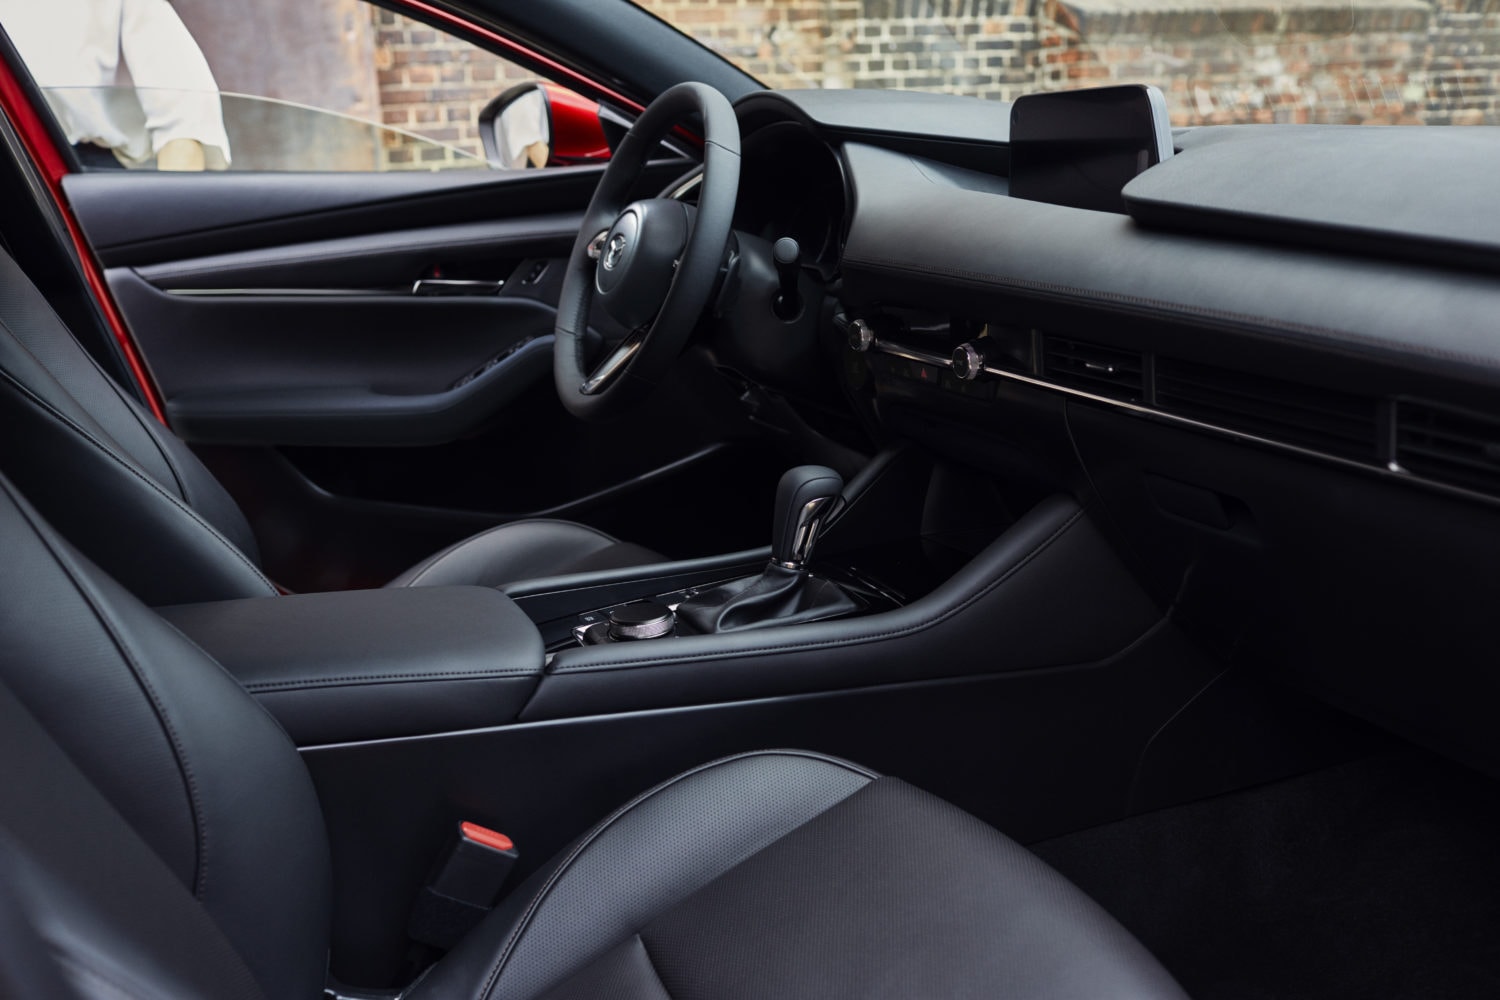 2019 Mazda3 Interior